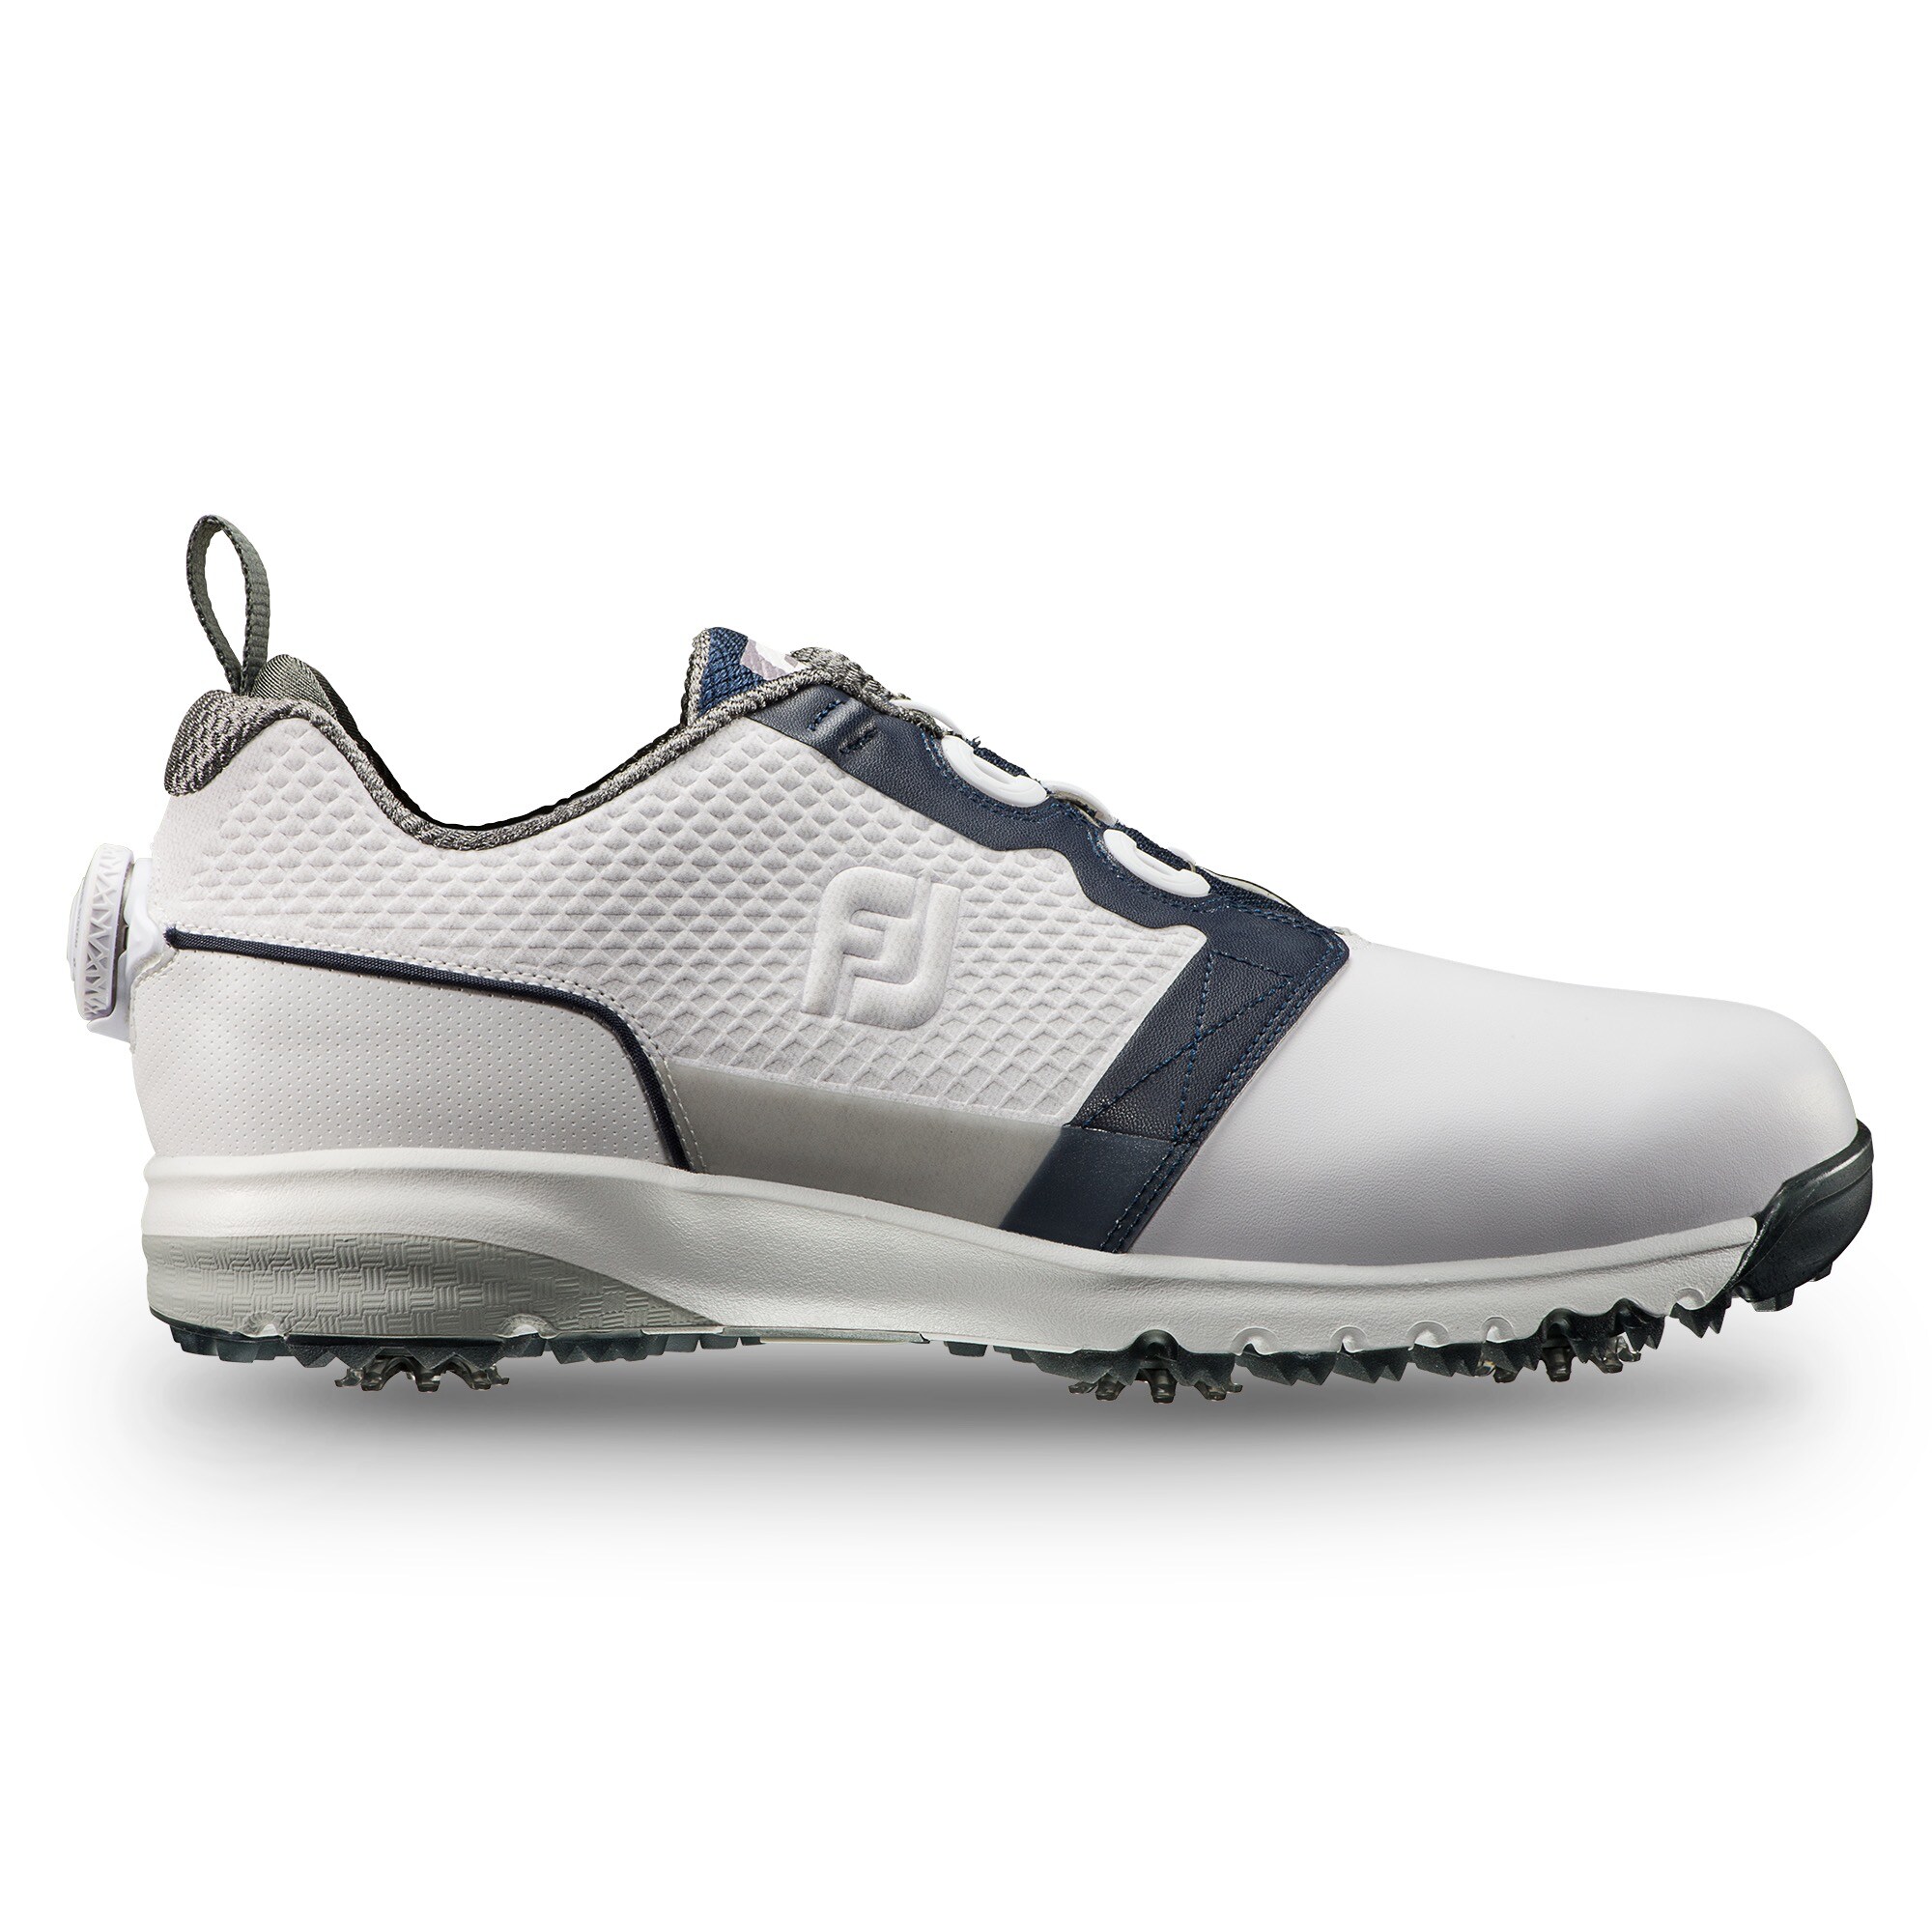 ContourFIT BOA® Golf Shoes | FootJoy